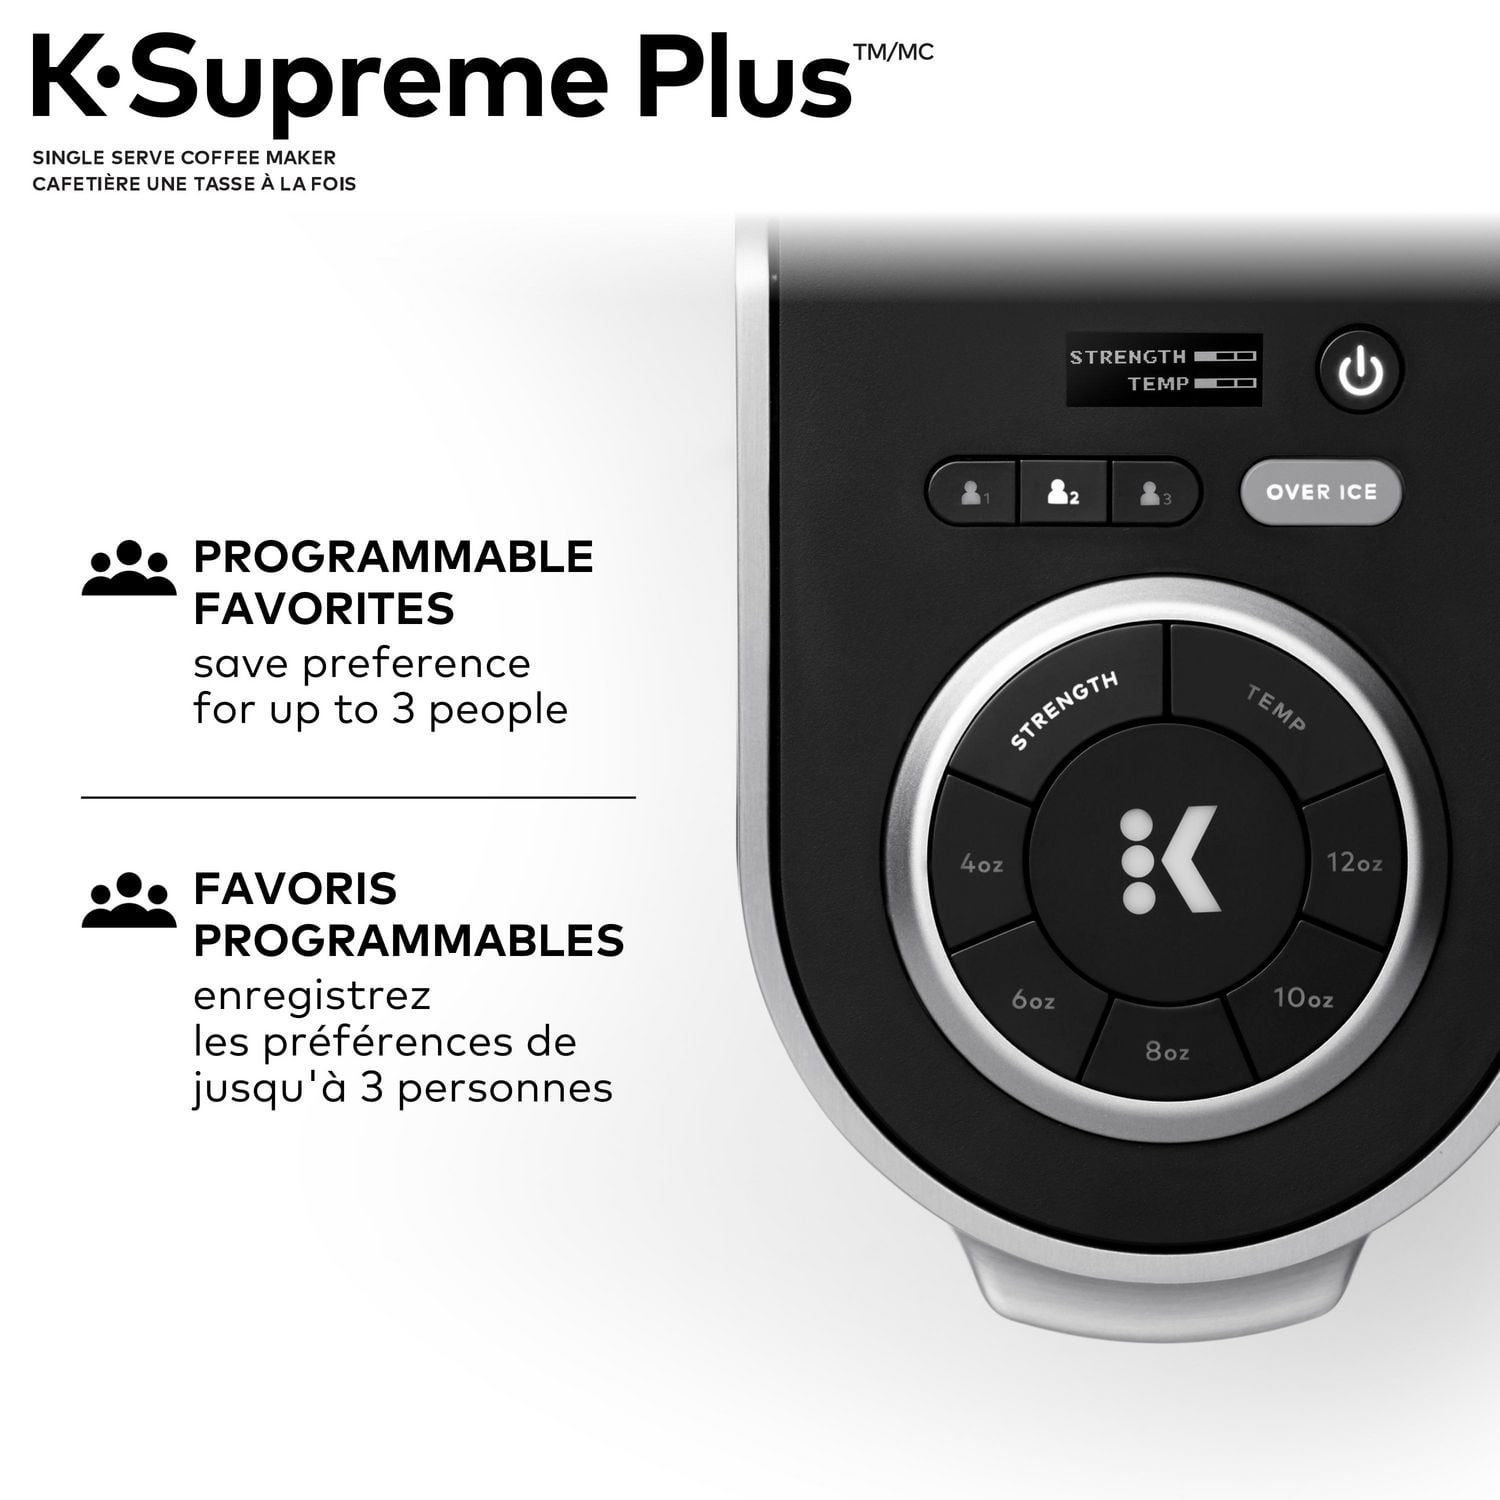 Keurig K-Supreme Plus Special Edition Single Serve Coffee Maker